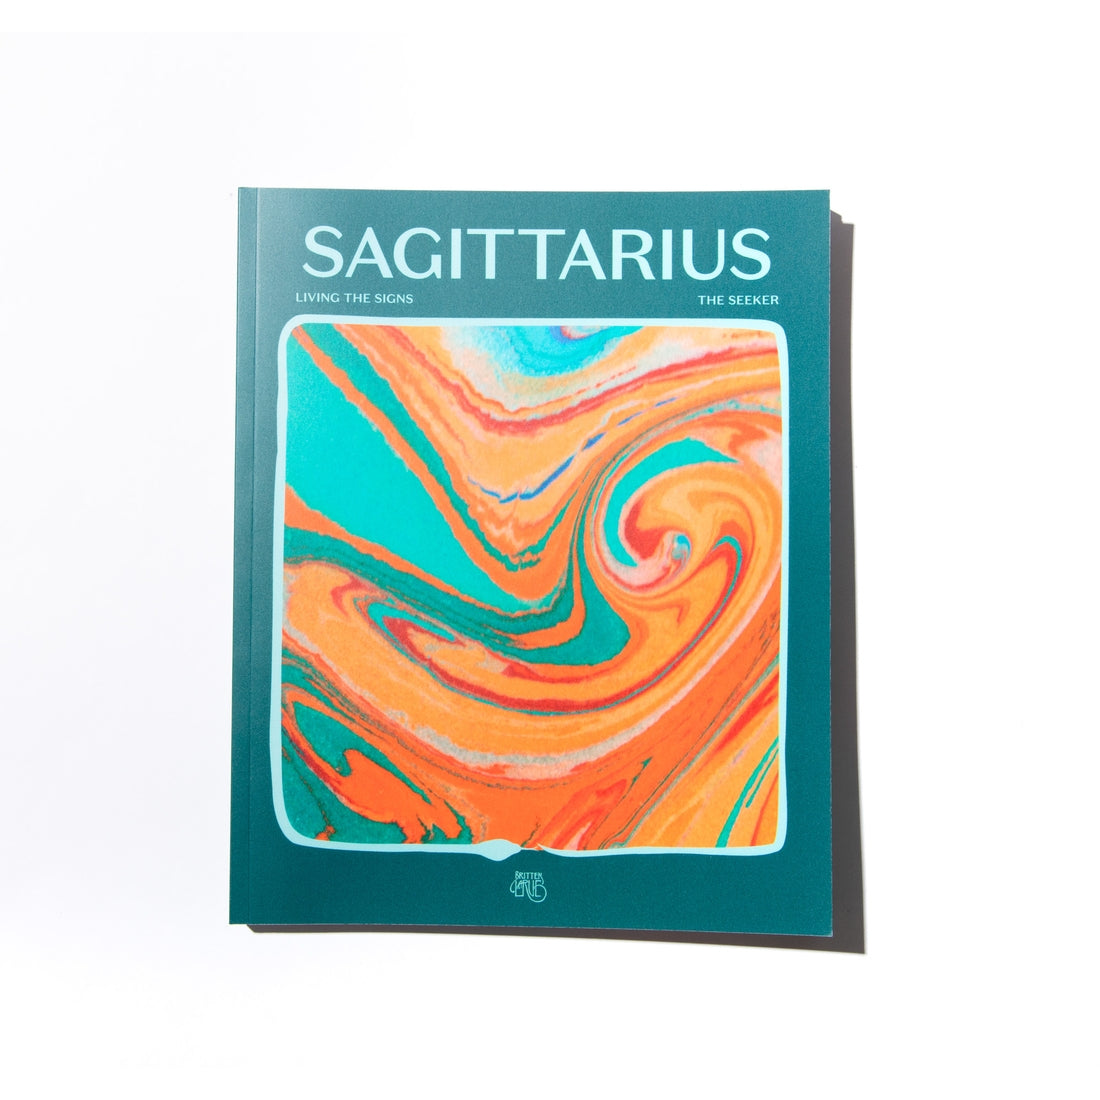 Living the Signs: Sagittarius